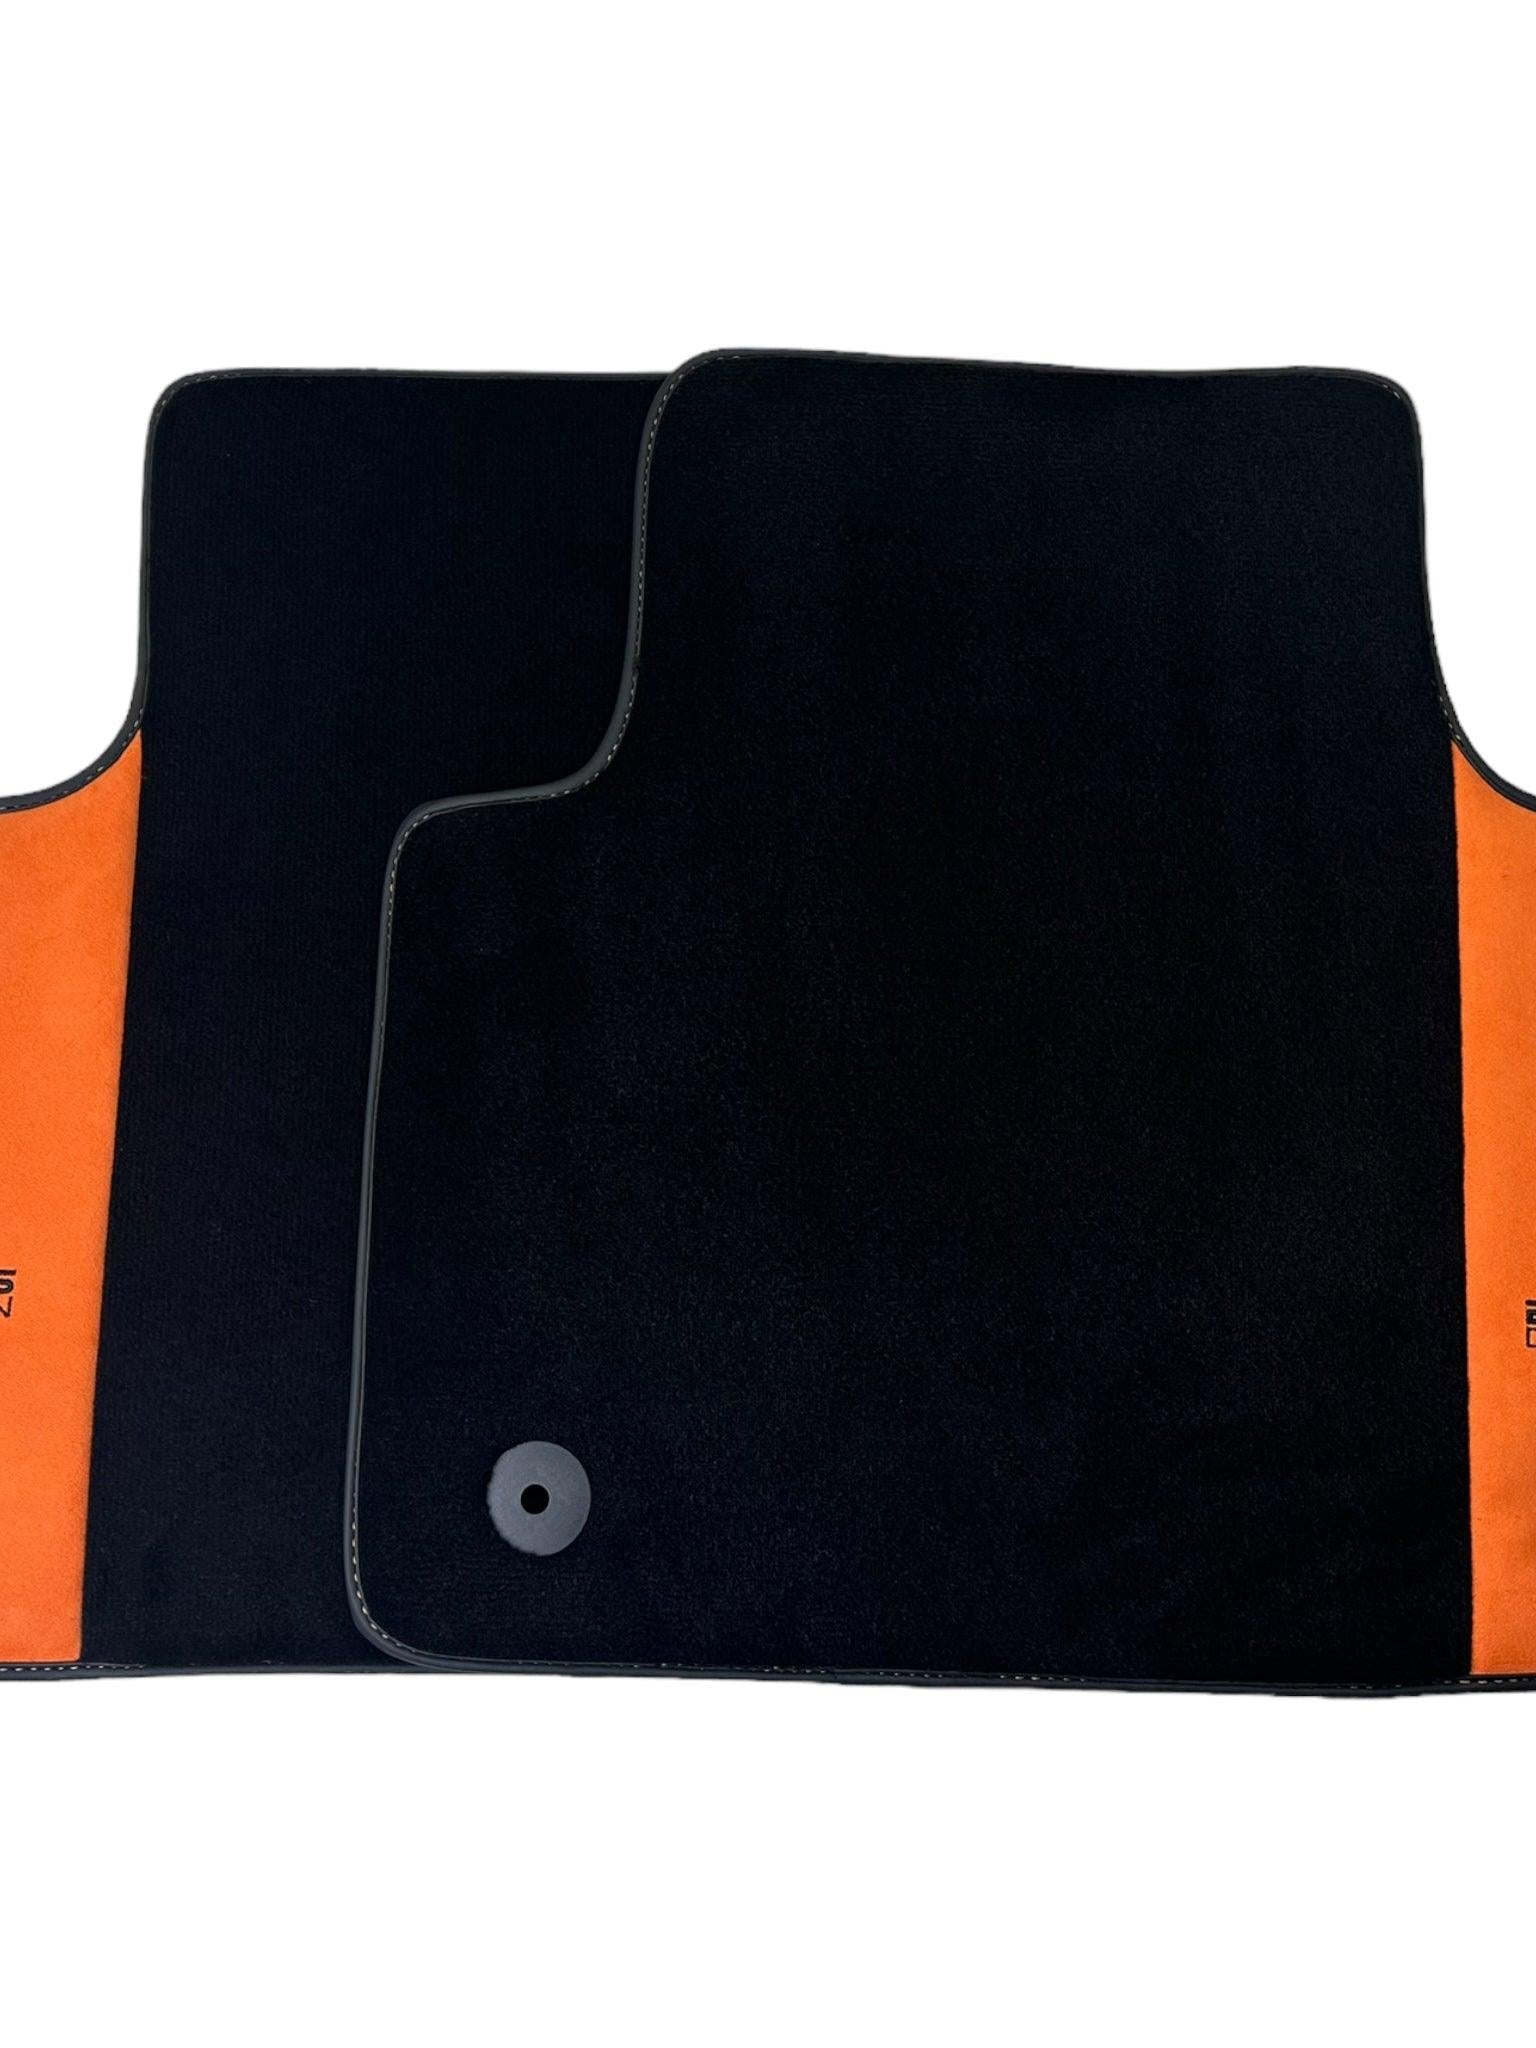 Black Floor Mats for A7 - C8 (2018-2023) Orange Alcantara | ER56 Design